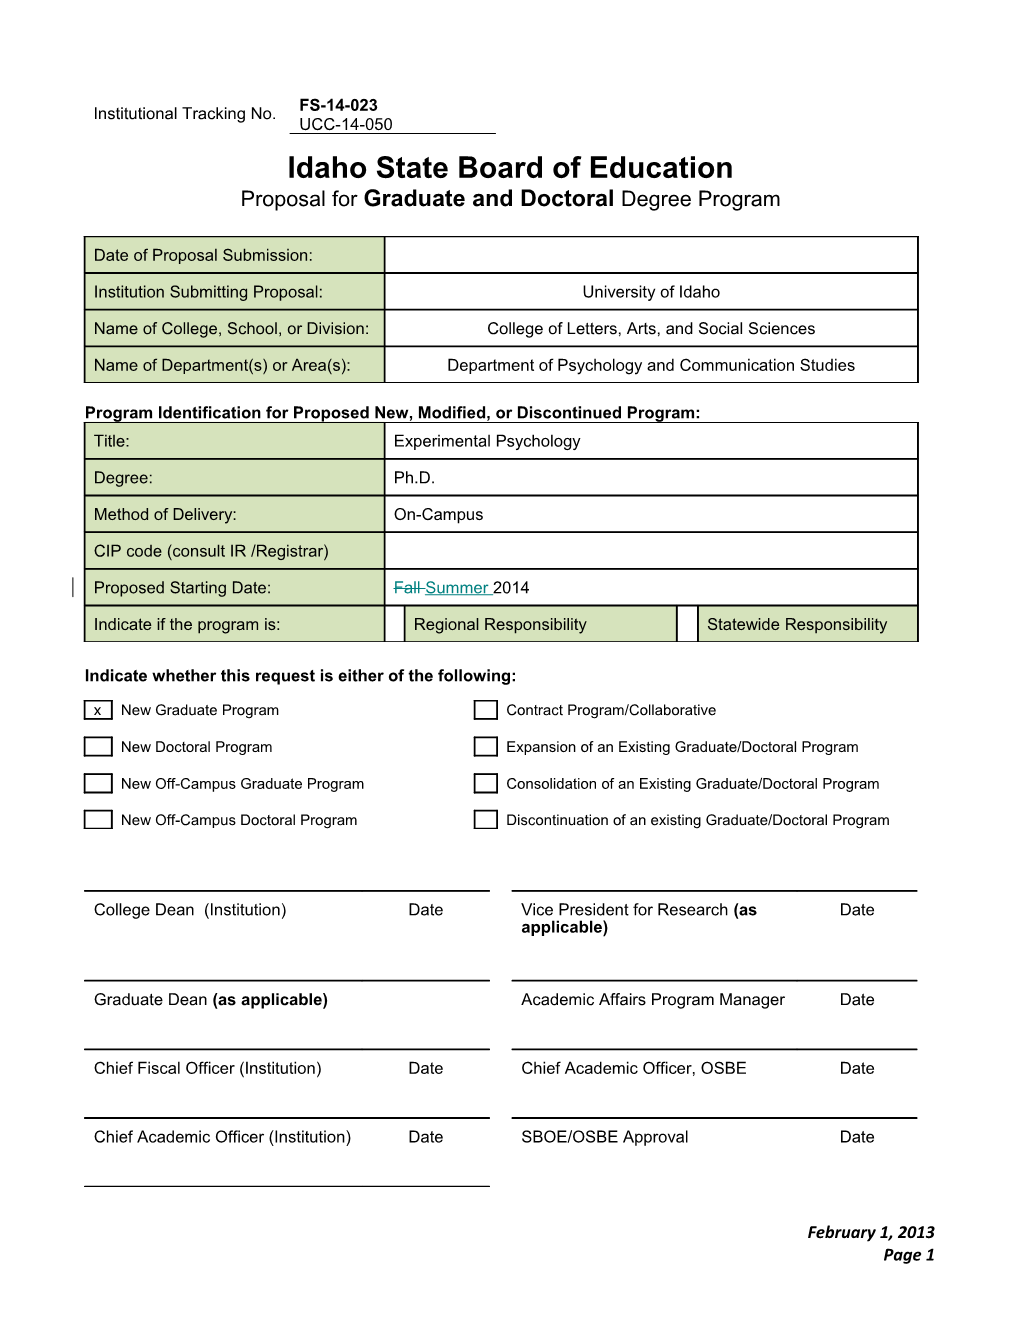 Idaho State Board of Education s2